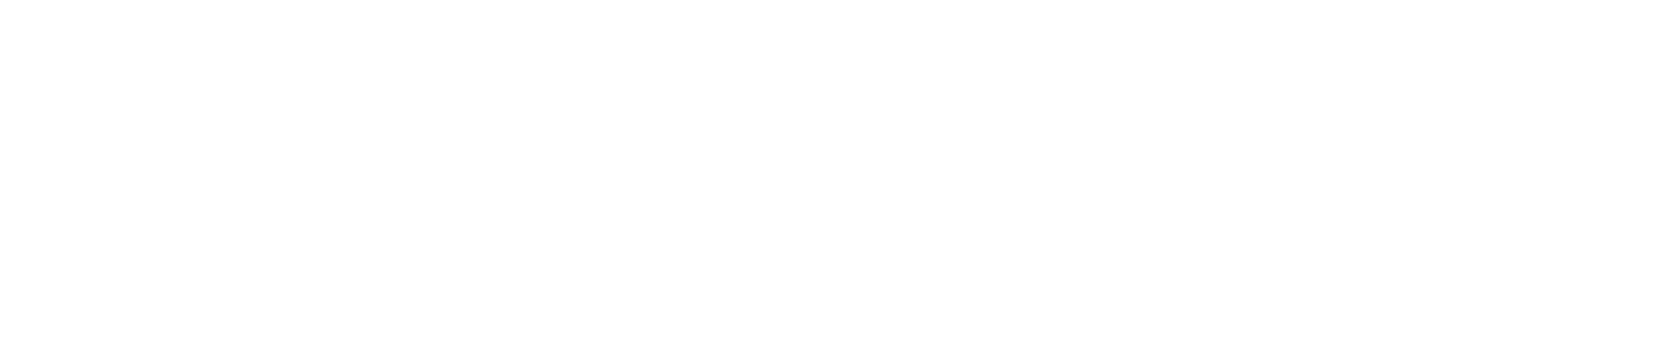 Save Redfield Cinema